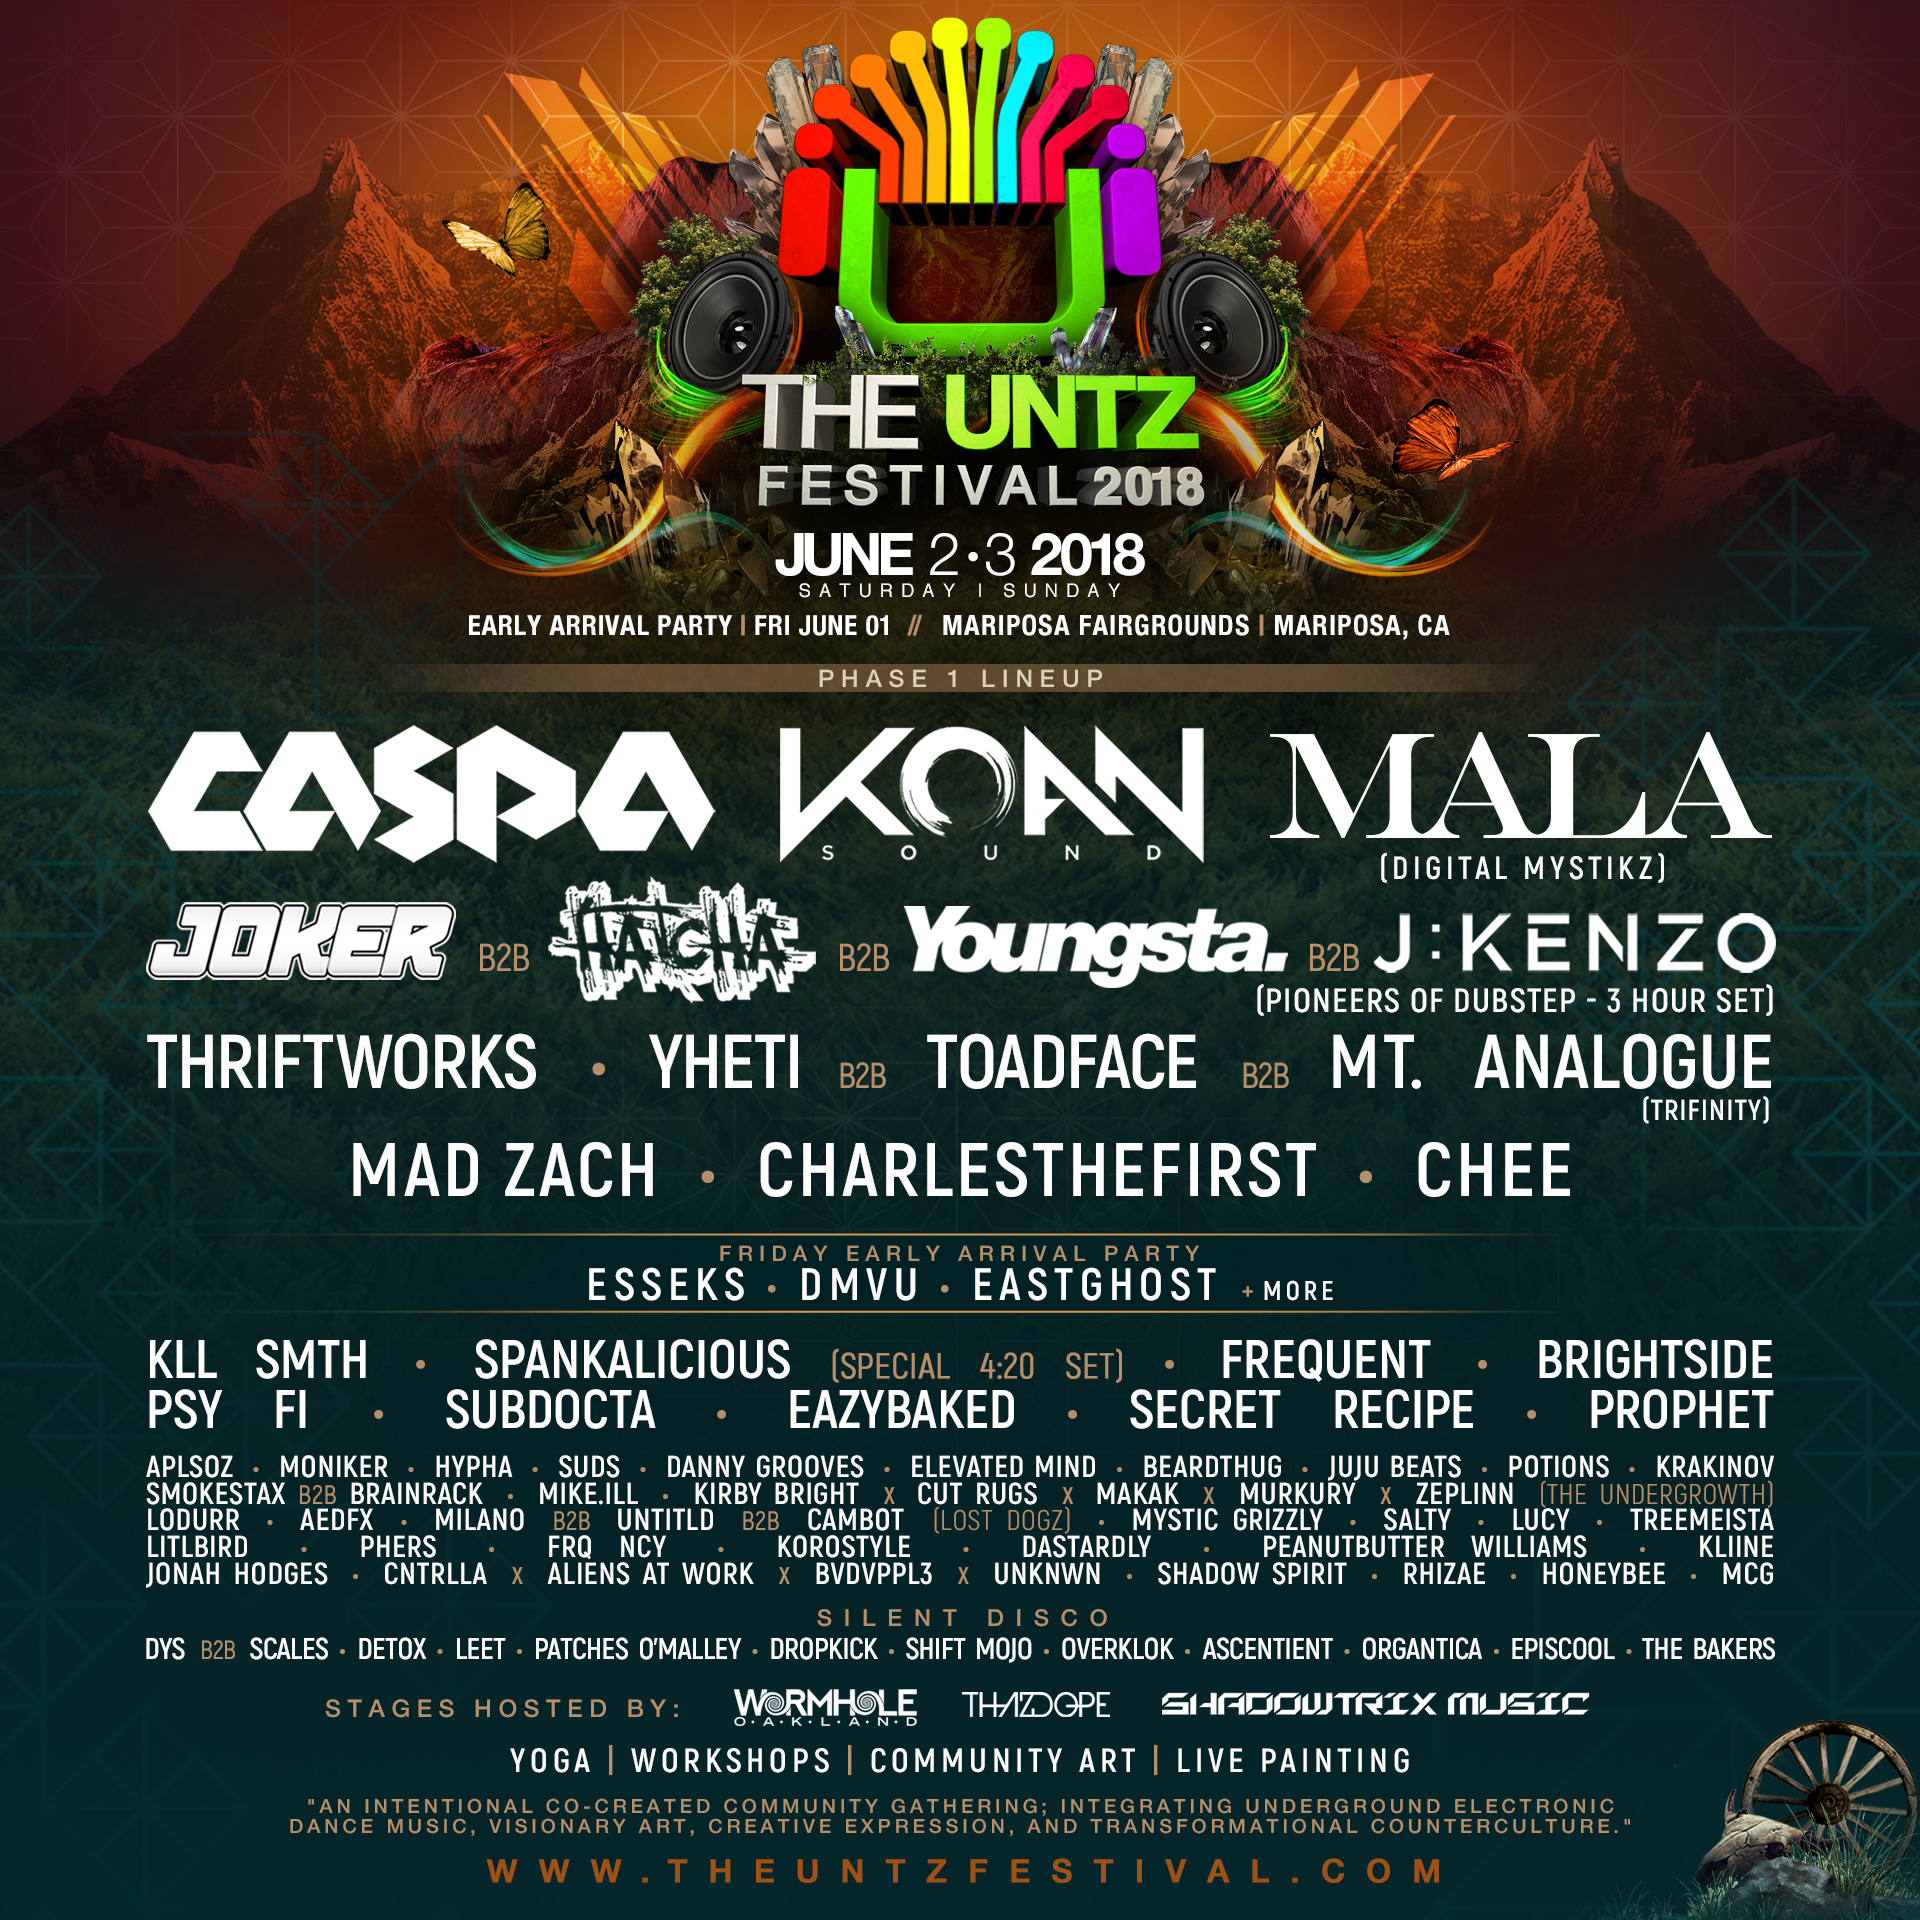 The Untz Festival